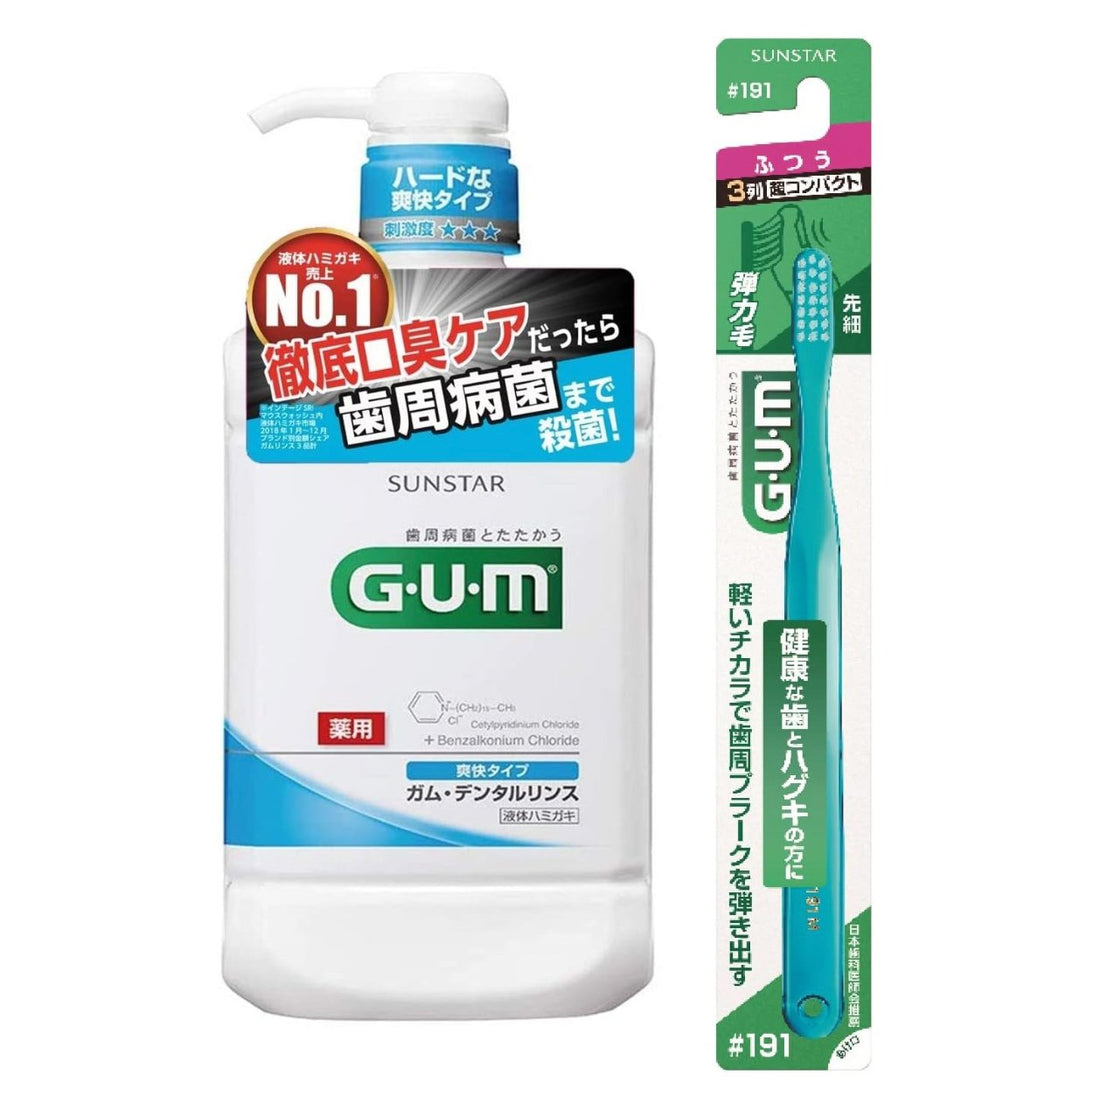 GUM [Quasi-drug] Dental rinse, medicated liquid toothpaste [Refreshing type (alcohol combination), cool mint type] 960ml + 1 toothbrush - NihonMura